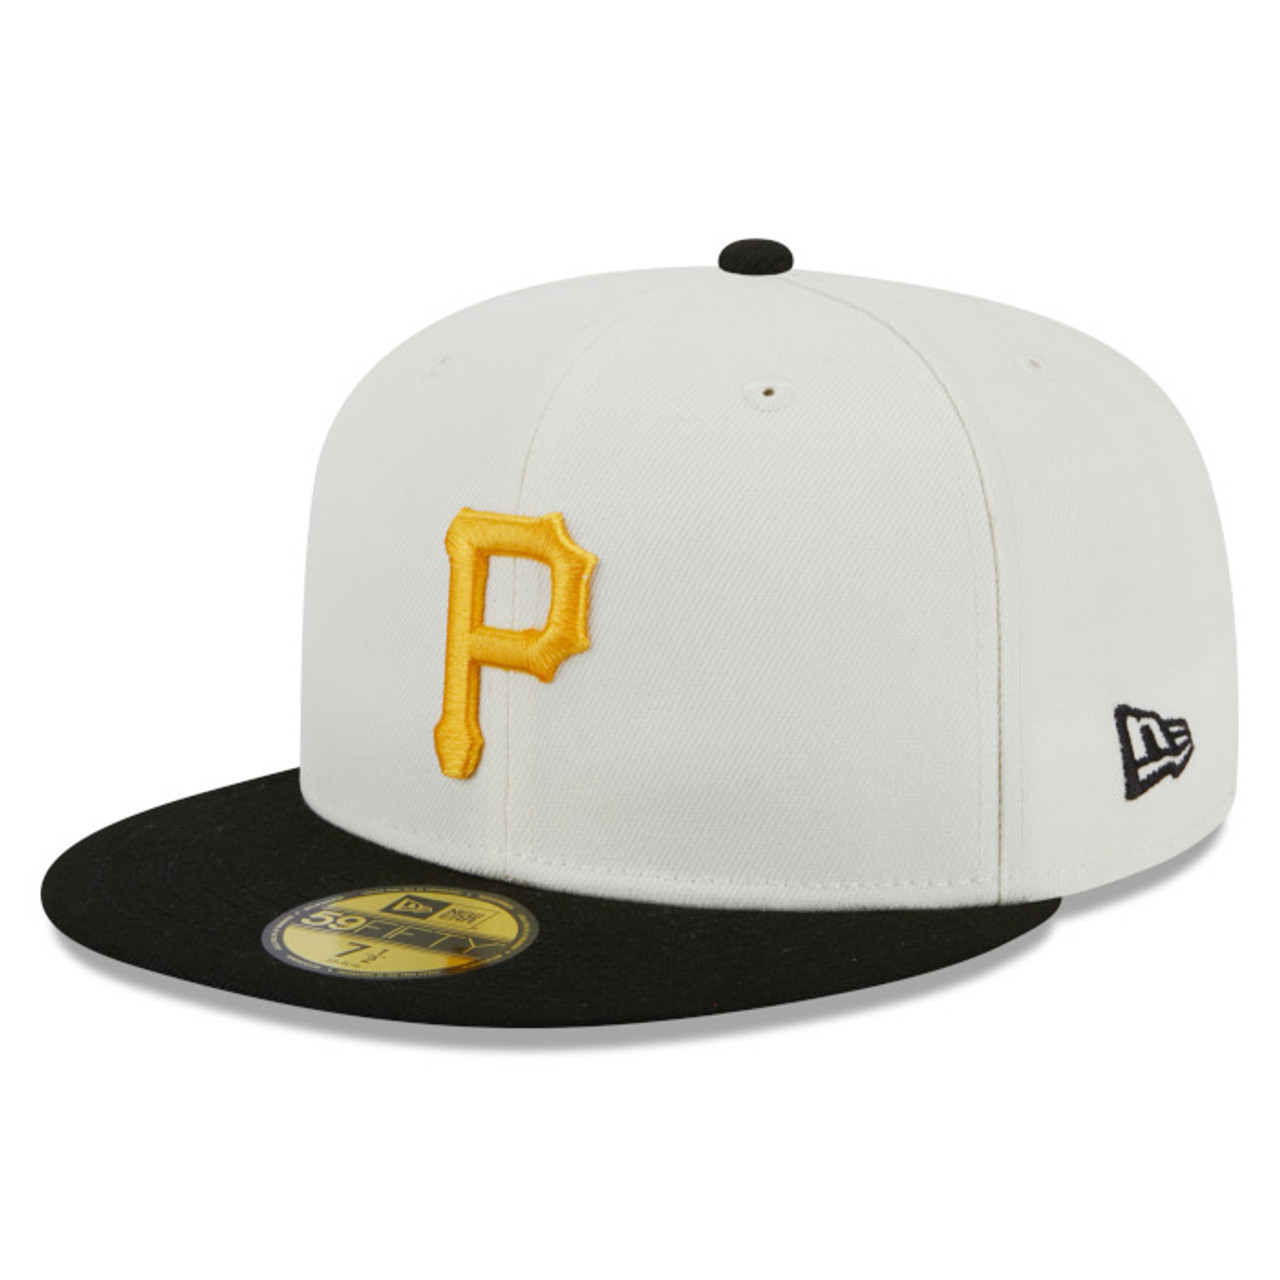 MLB Pittsburgh Pirates Men's Cooperstown Baseball Jersey.